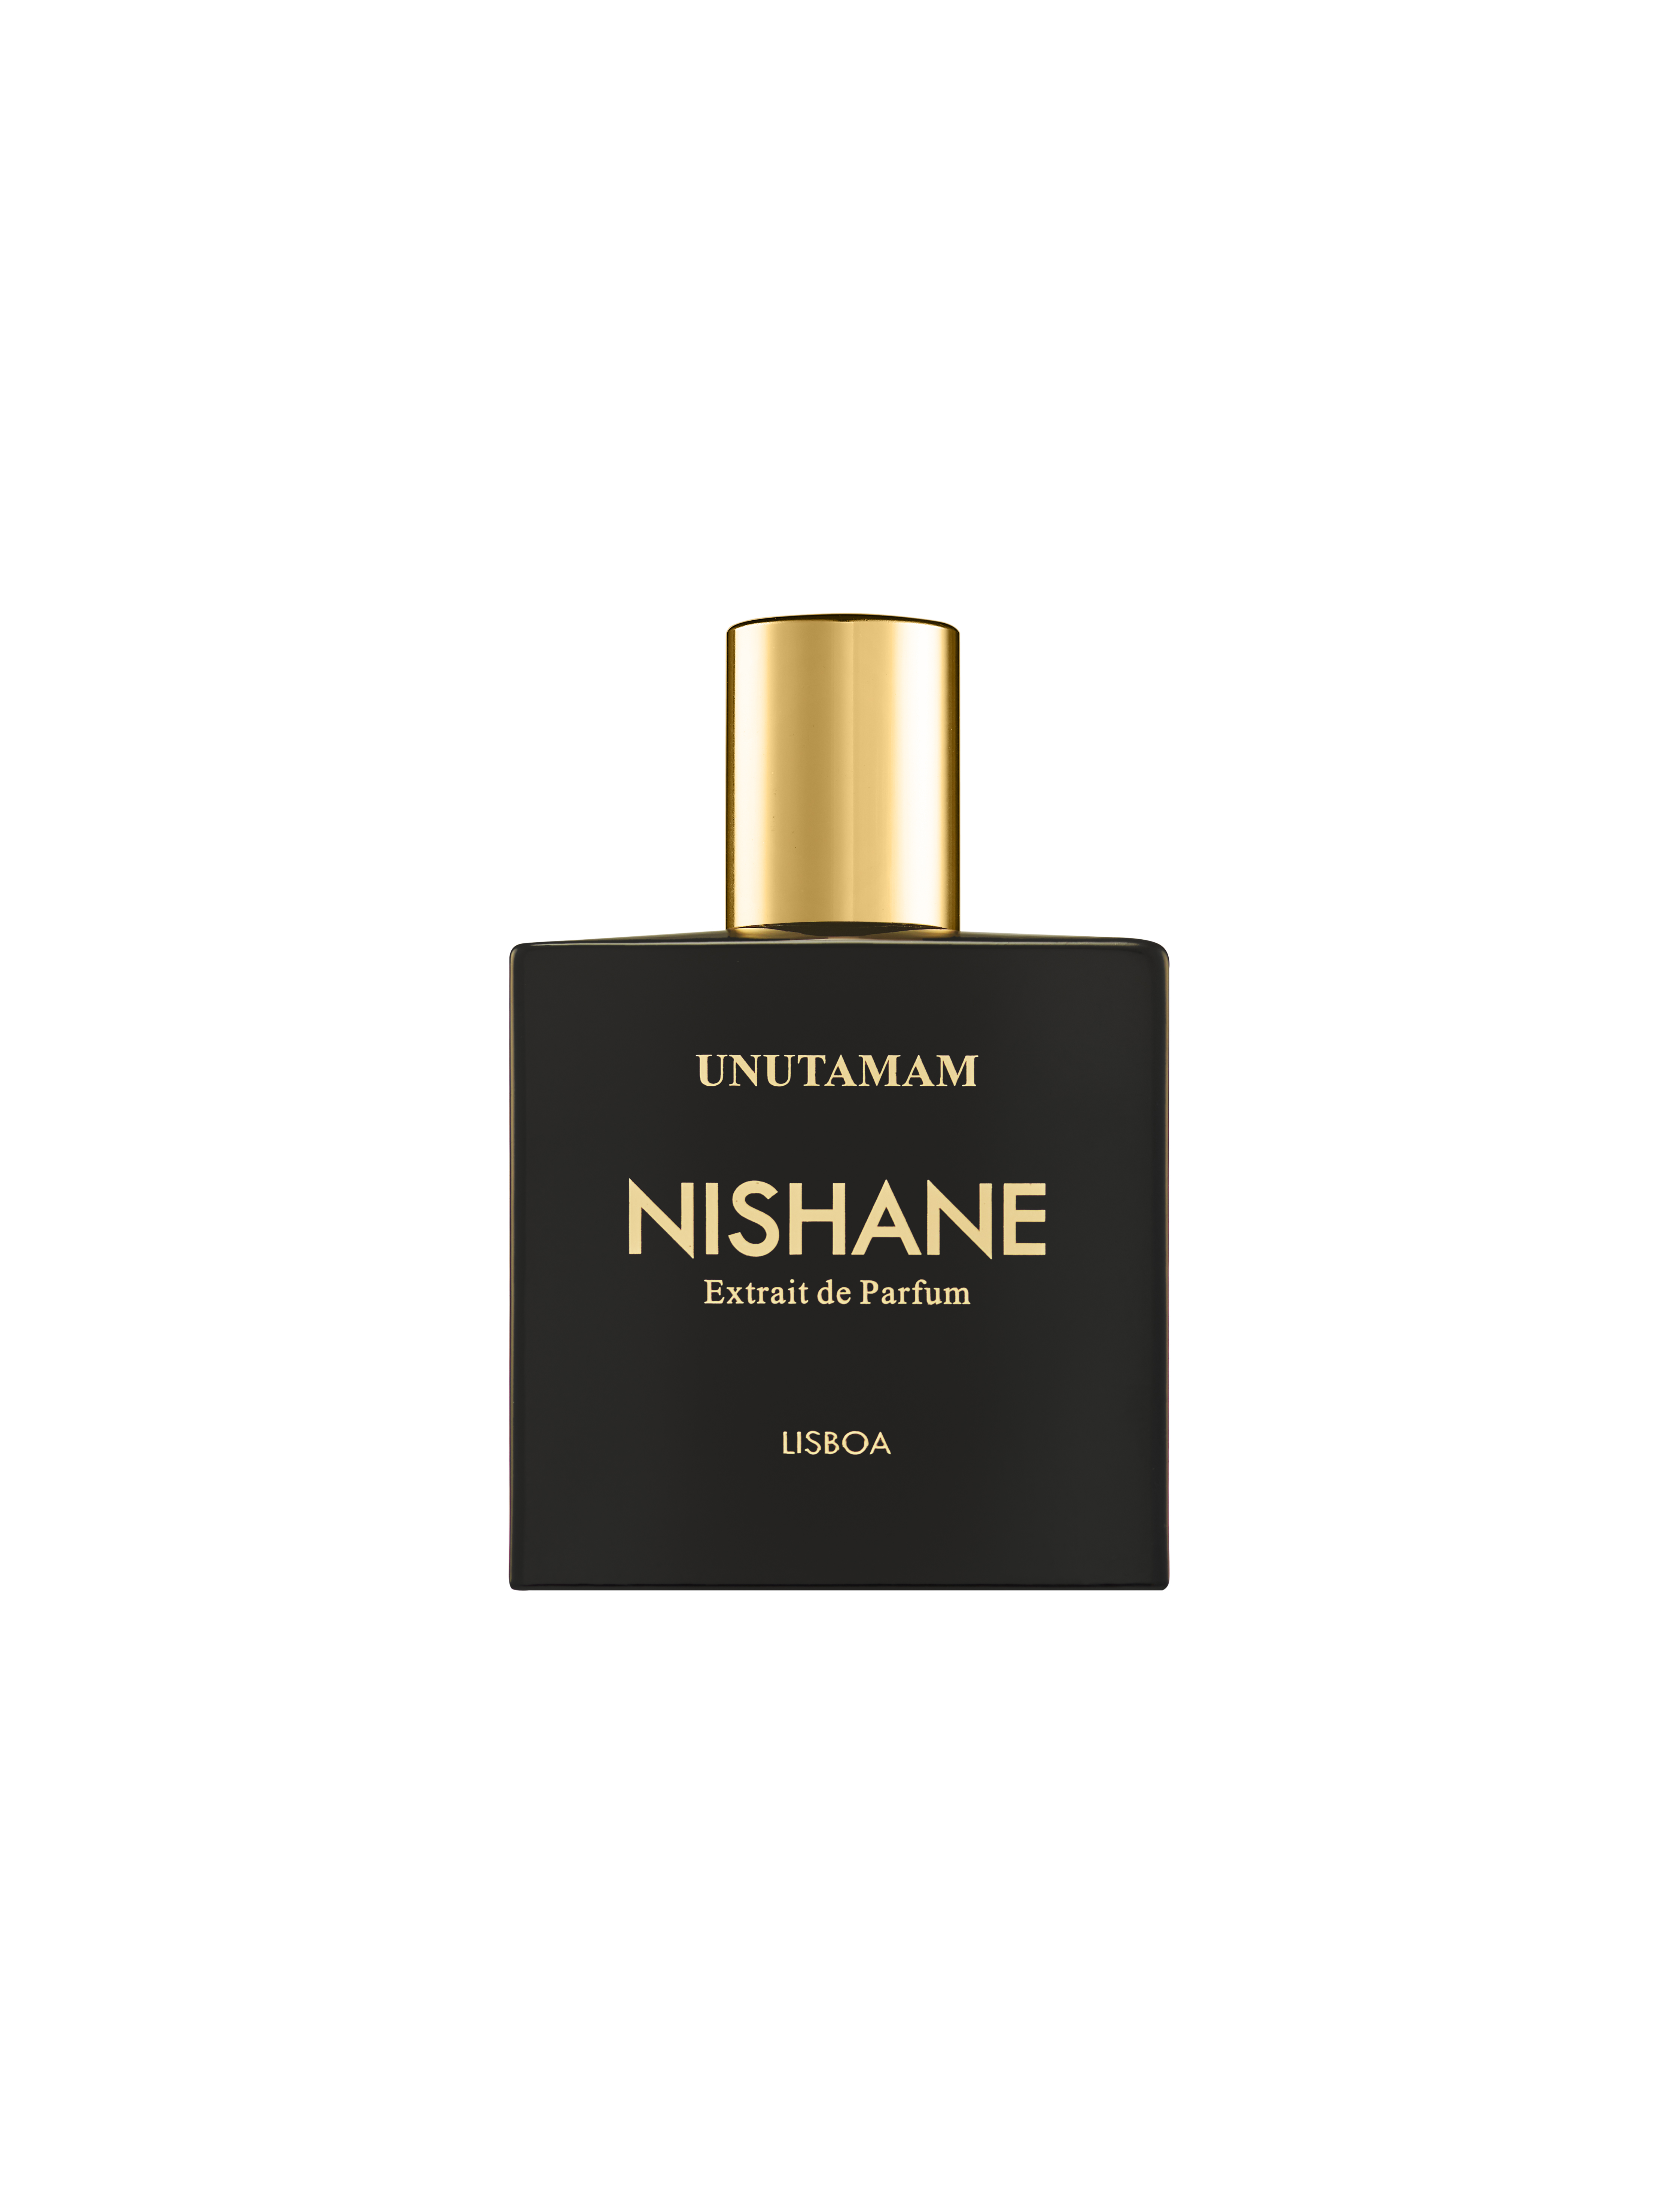 Nishane - Unutamam - Extrait de Parfum